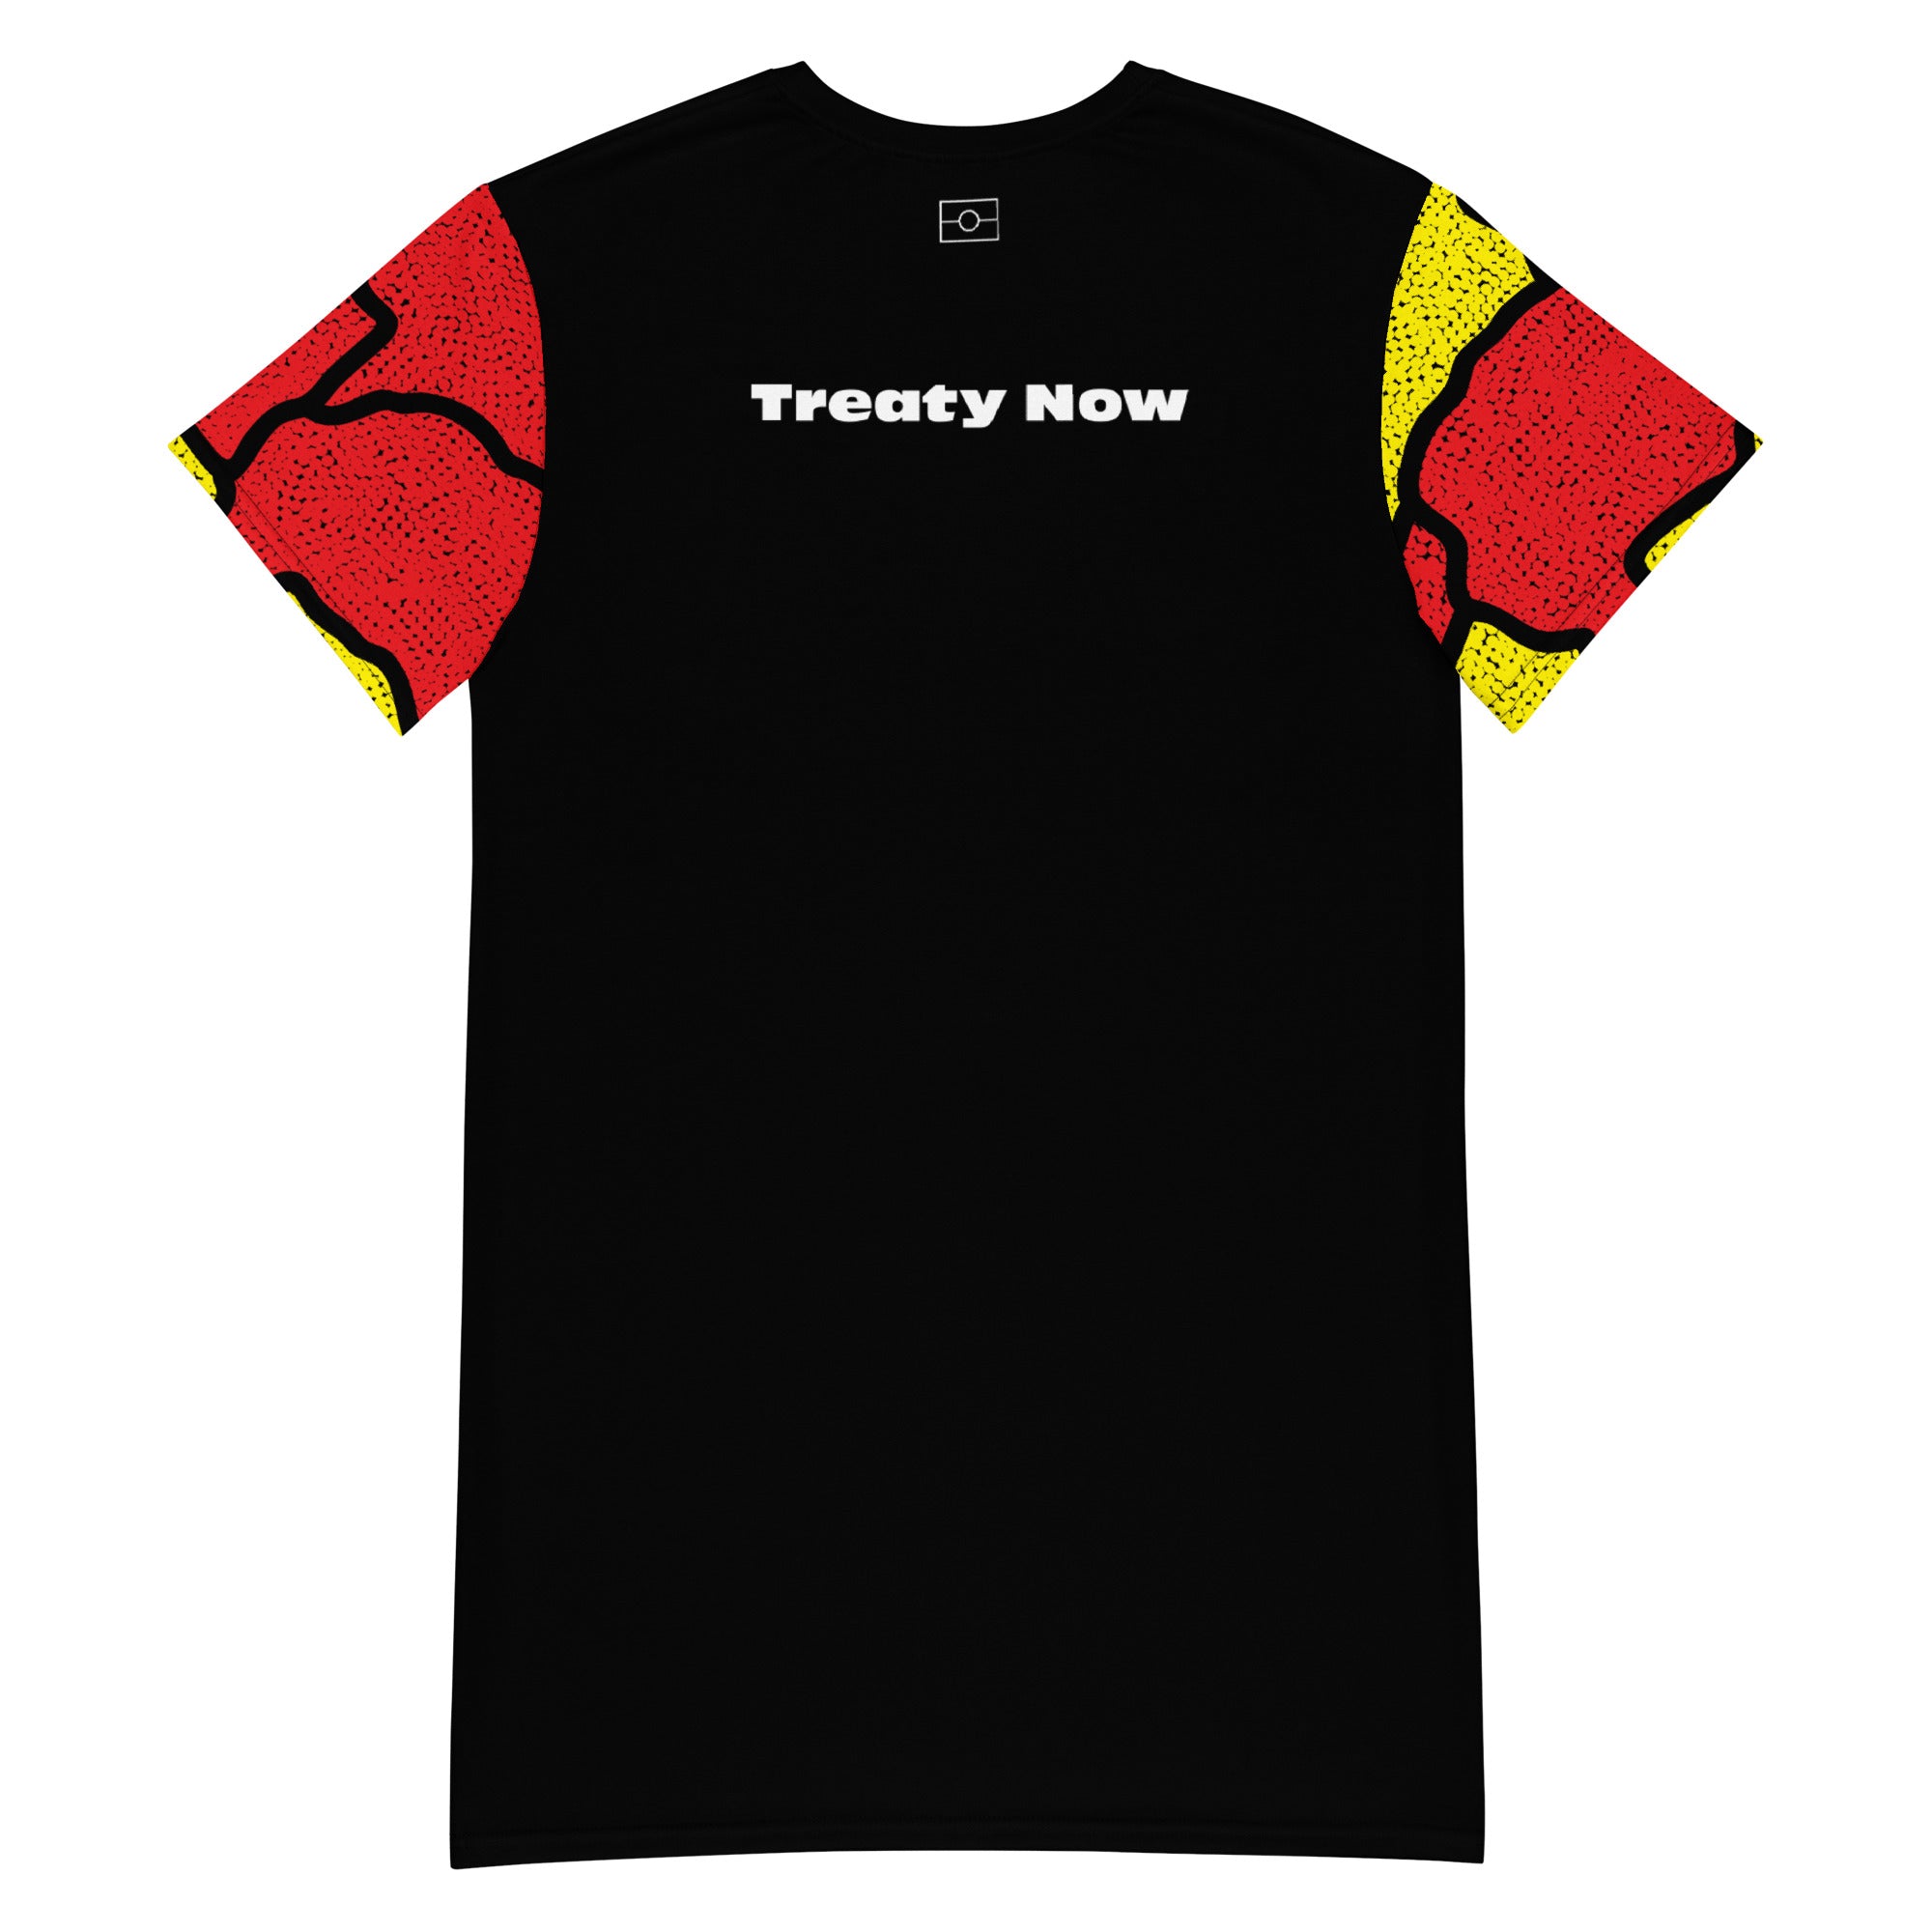 Treaty Now Tee Dress